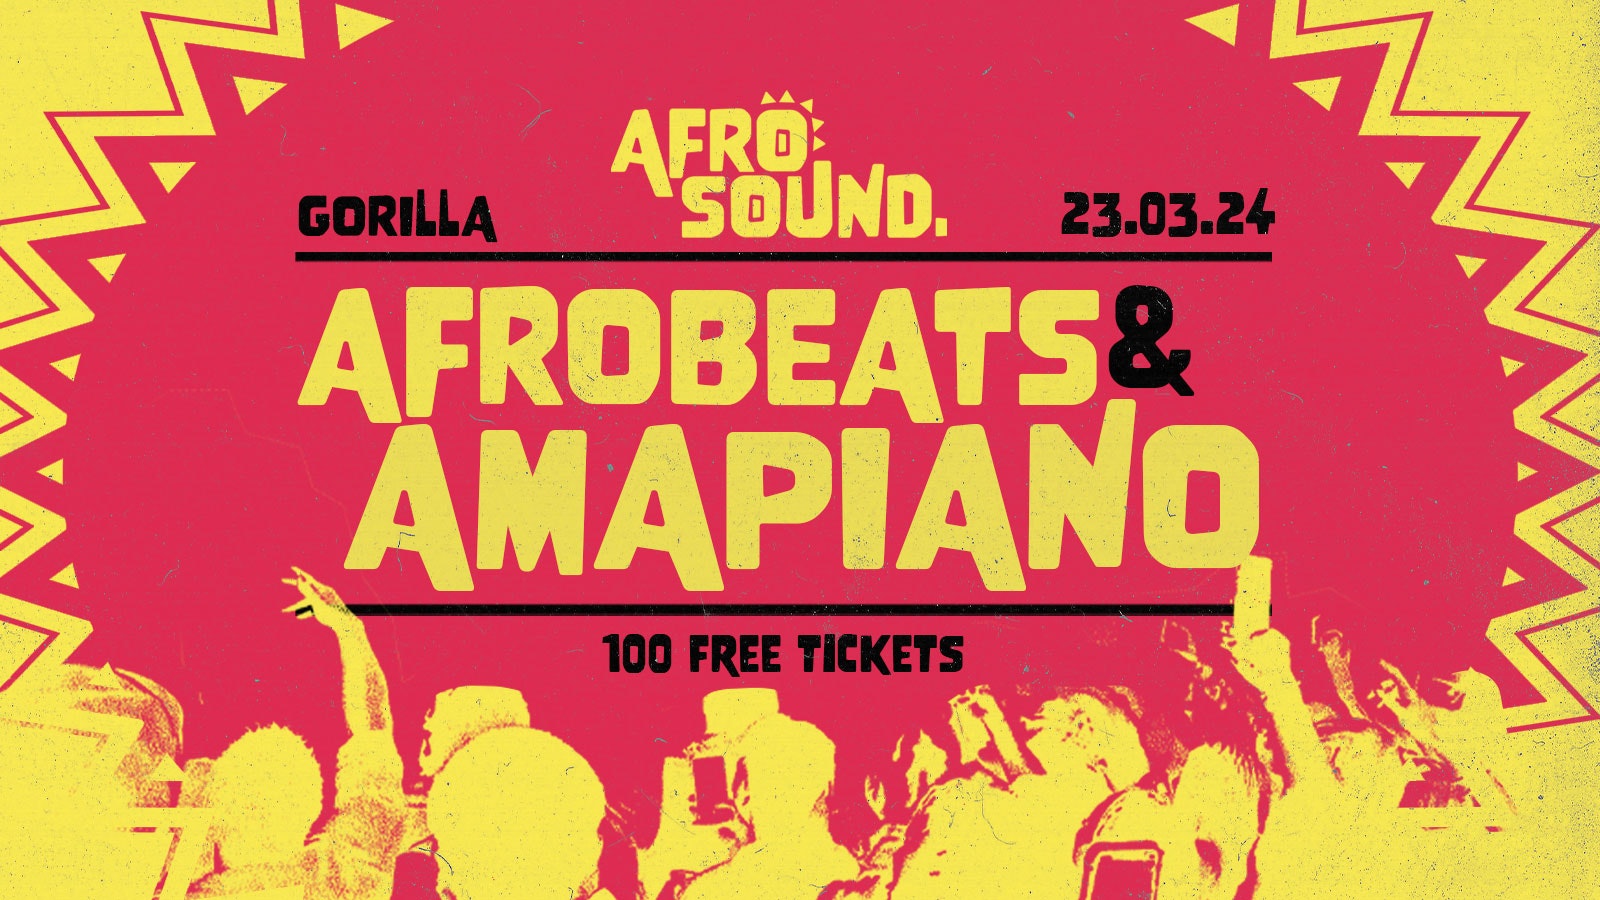 AfroSound  AFROBEATS & AMAPIANO? (LMTD. FREE TICKETS AVAIL)